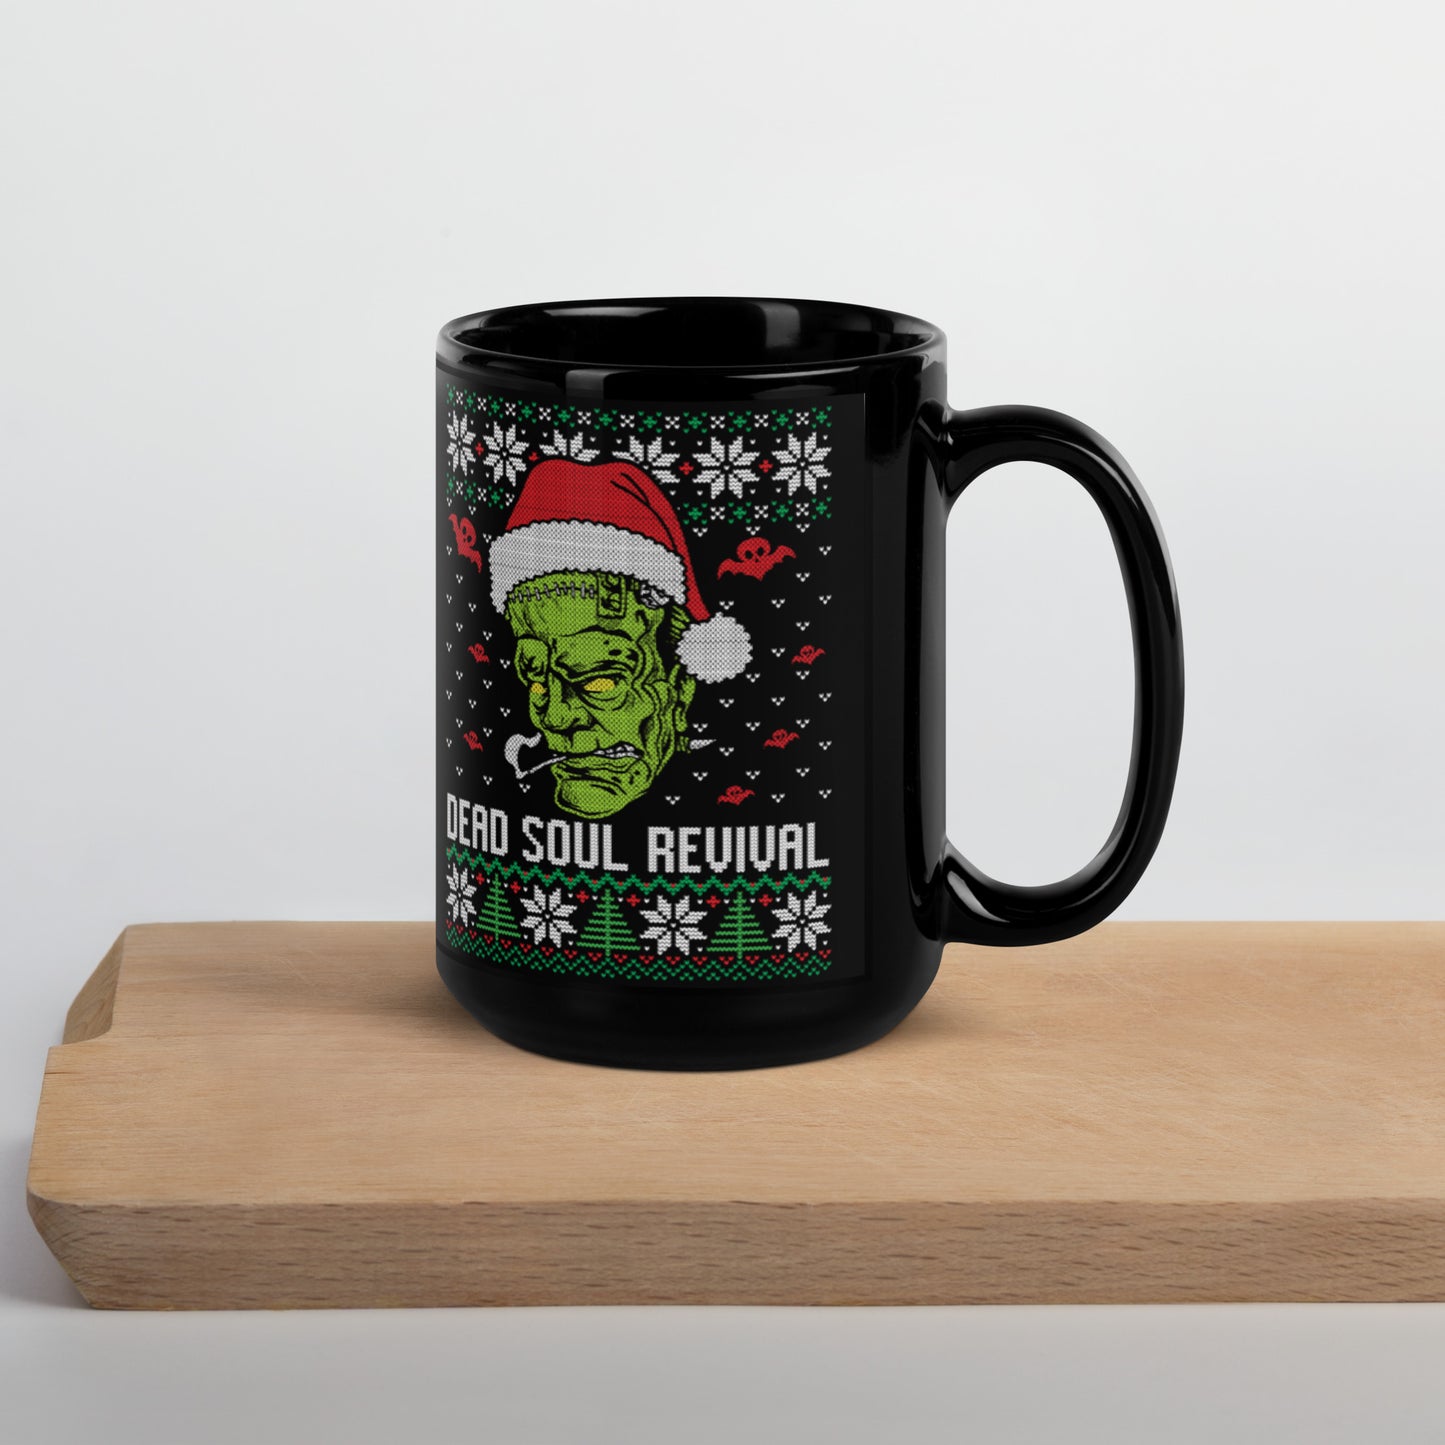 Dead Soul Revival Black Glossy Mug with Frankenstein